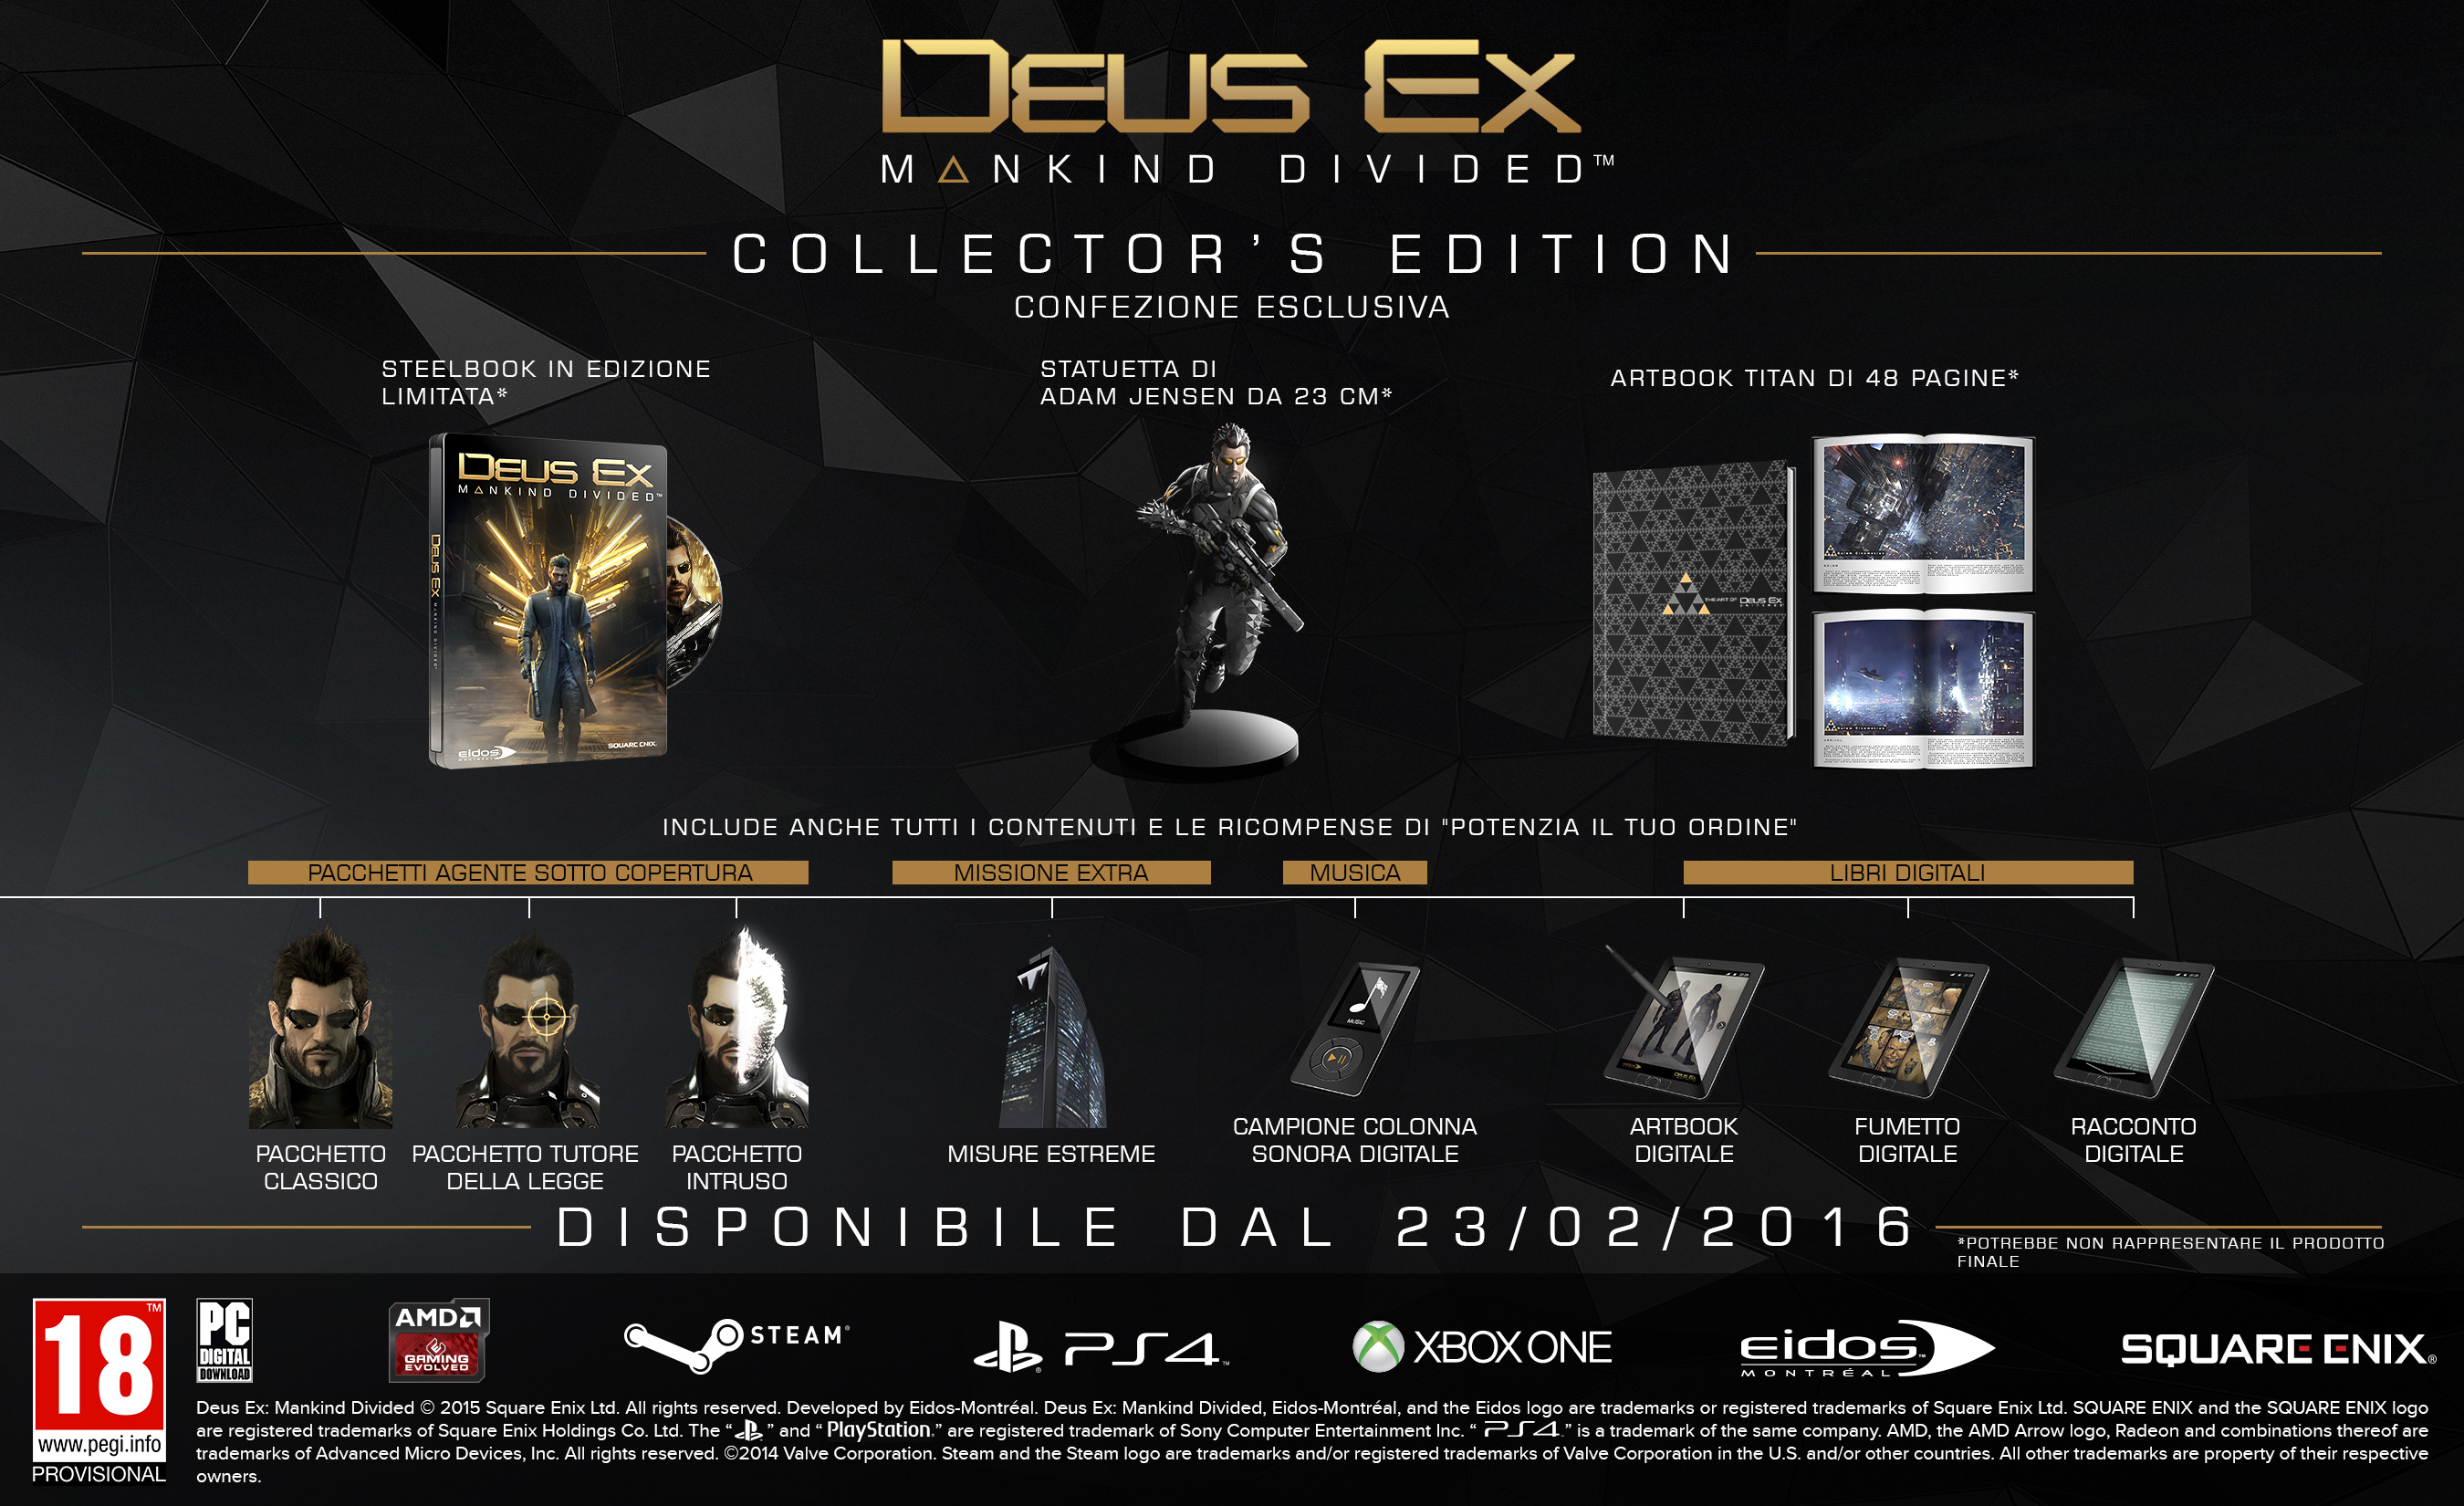 Square Enix rivela la data di uscita di Deus Ex: Mankind Divided